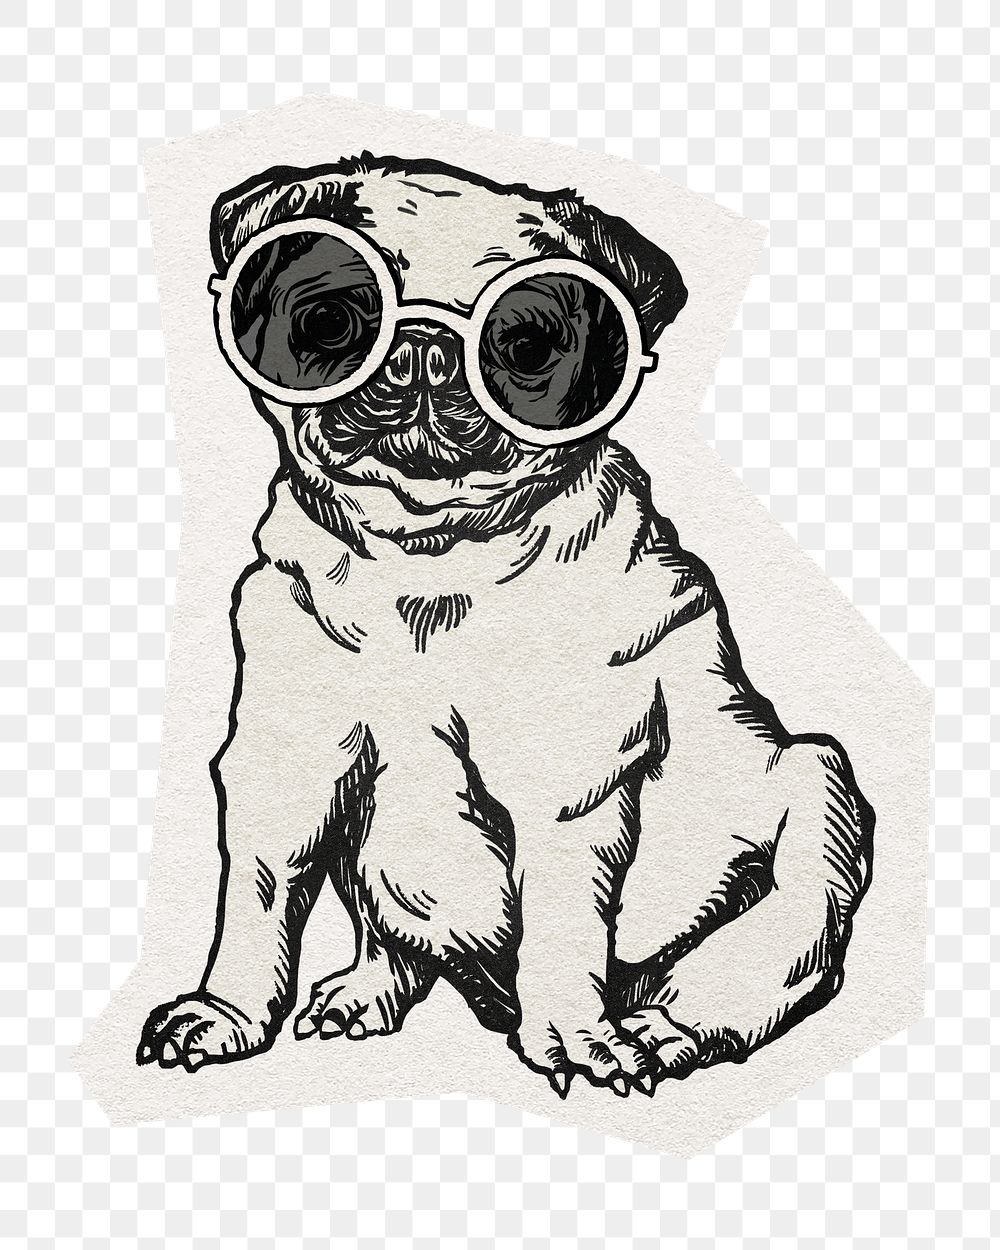 Cute pug dog png sticker, cut out paper design, transparent background